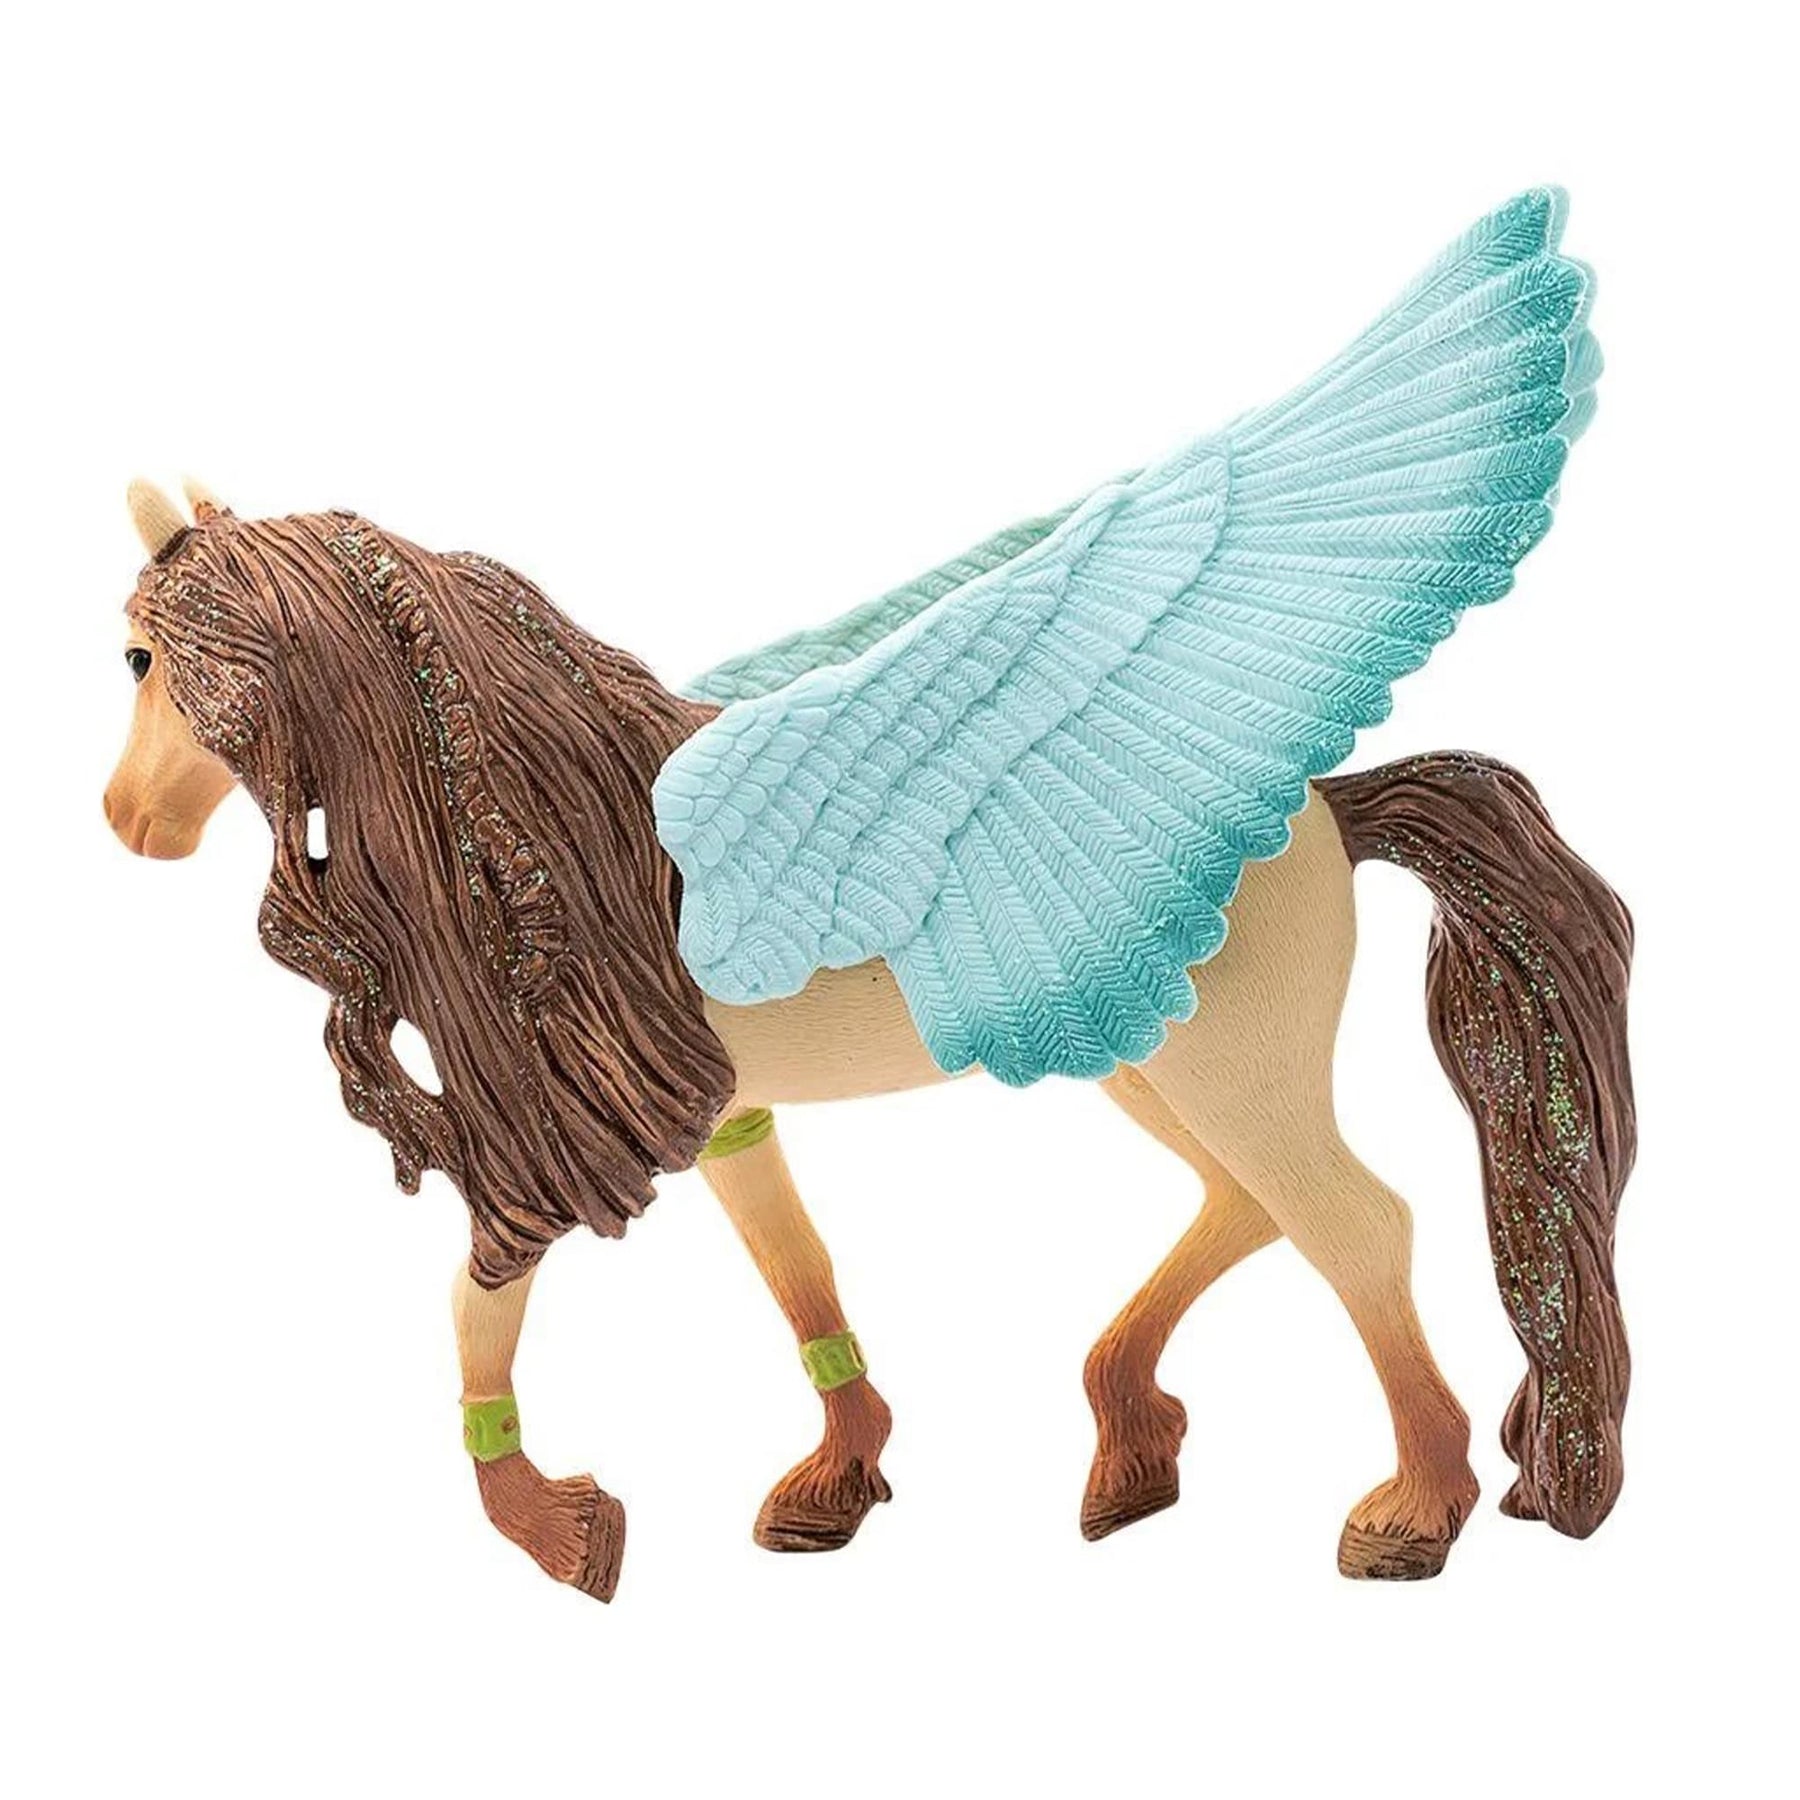 Schleich Decorated Pegasus Stallion Figure | 5.9 x 3.2 x 7.1 Inches